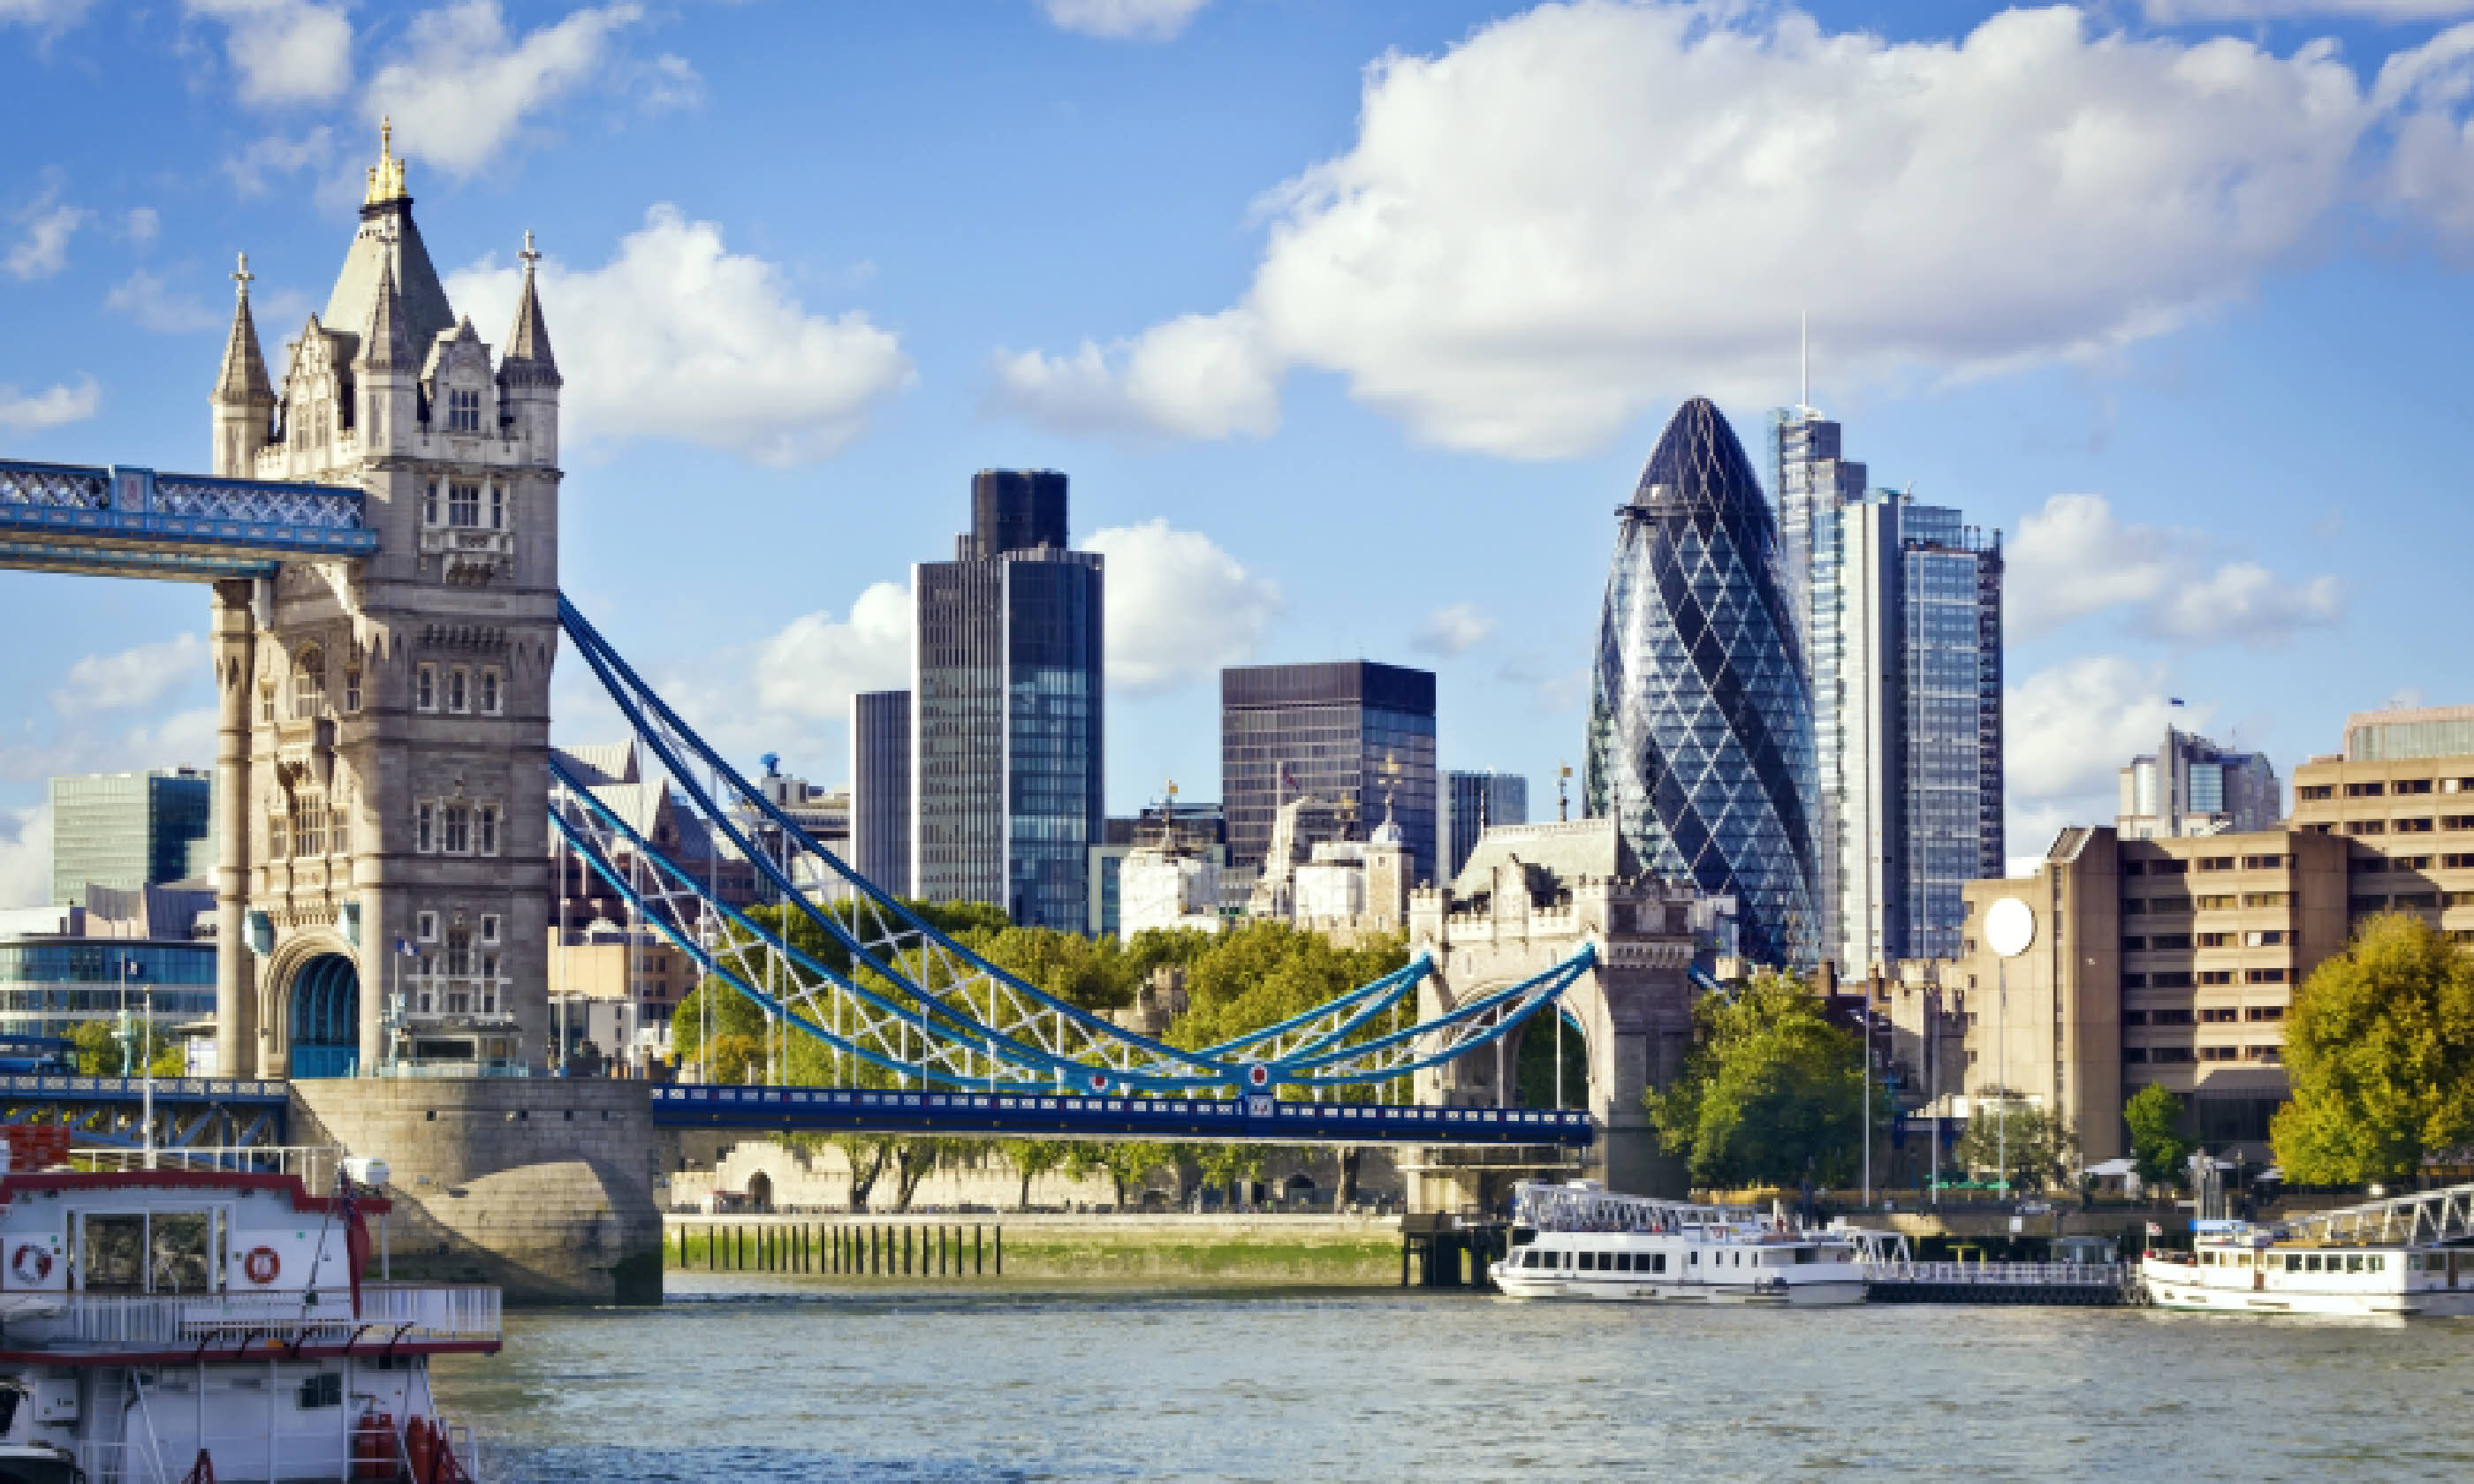 London for free (Shutterstock: see credit below)